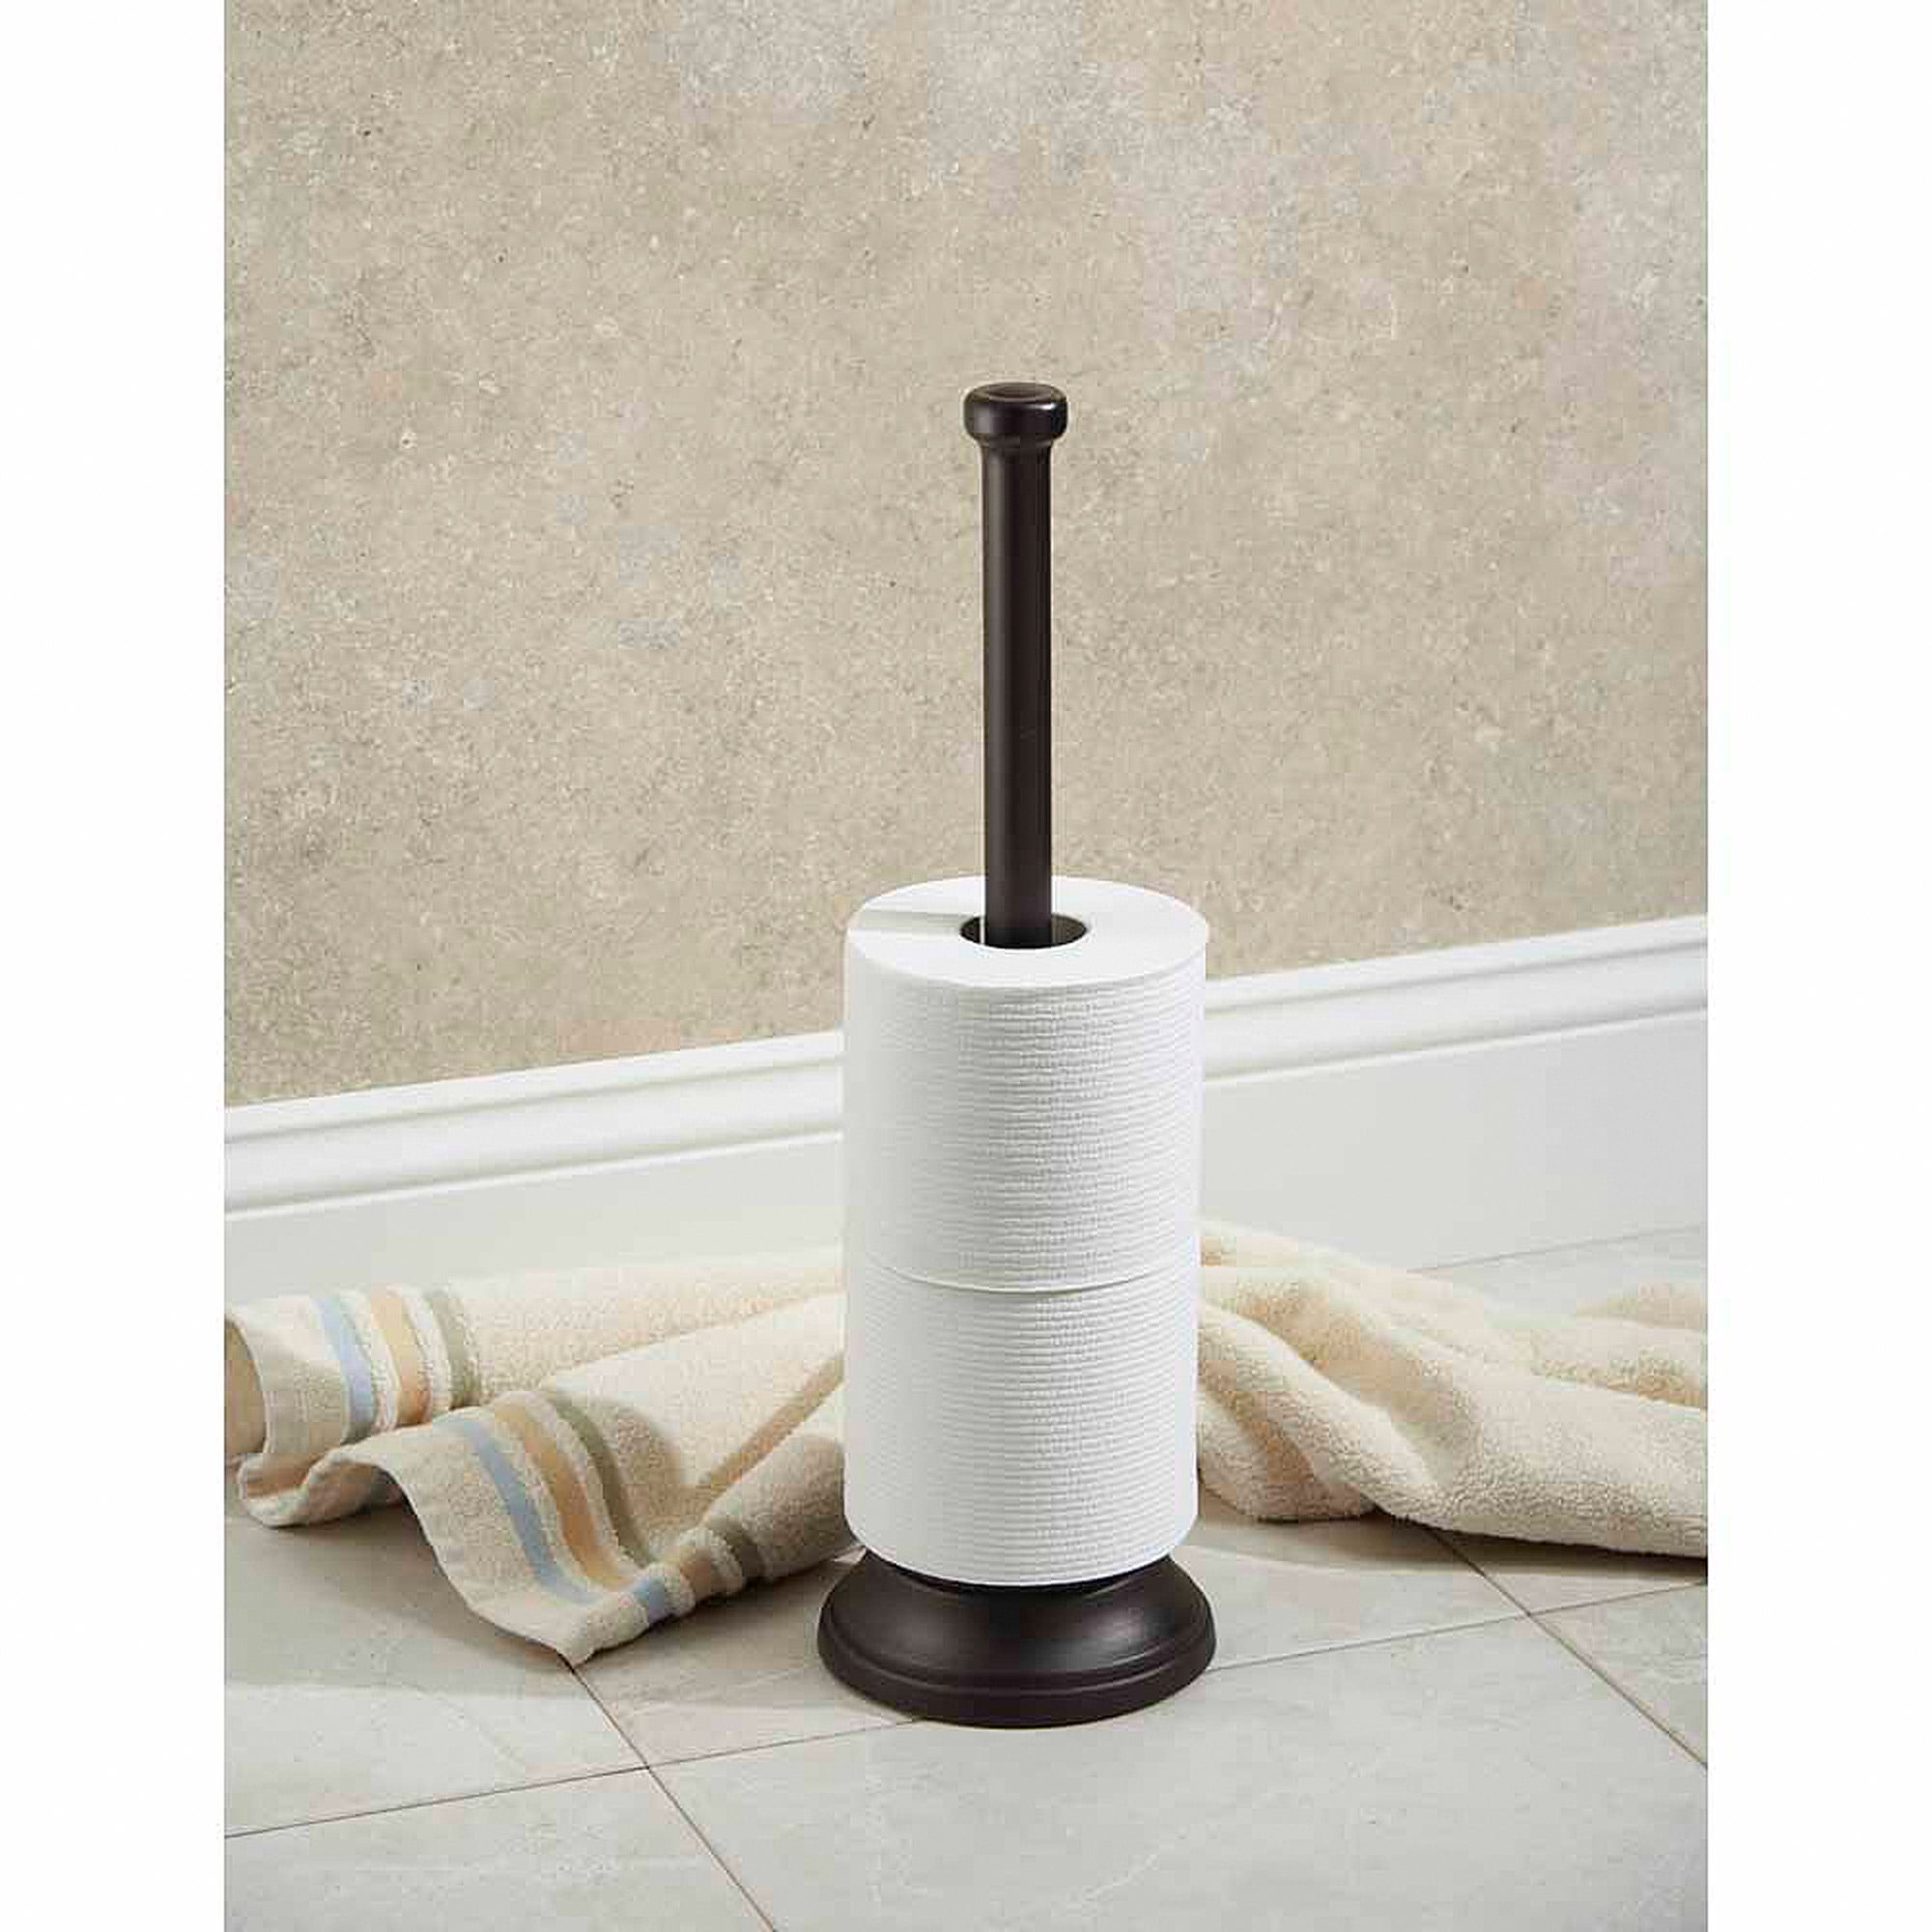 Interdesign Orbinni Spiral Free Standing Toilet Paper Holder Spare Roll Stor